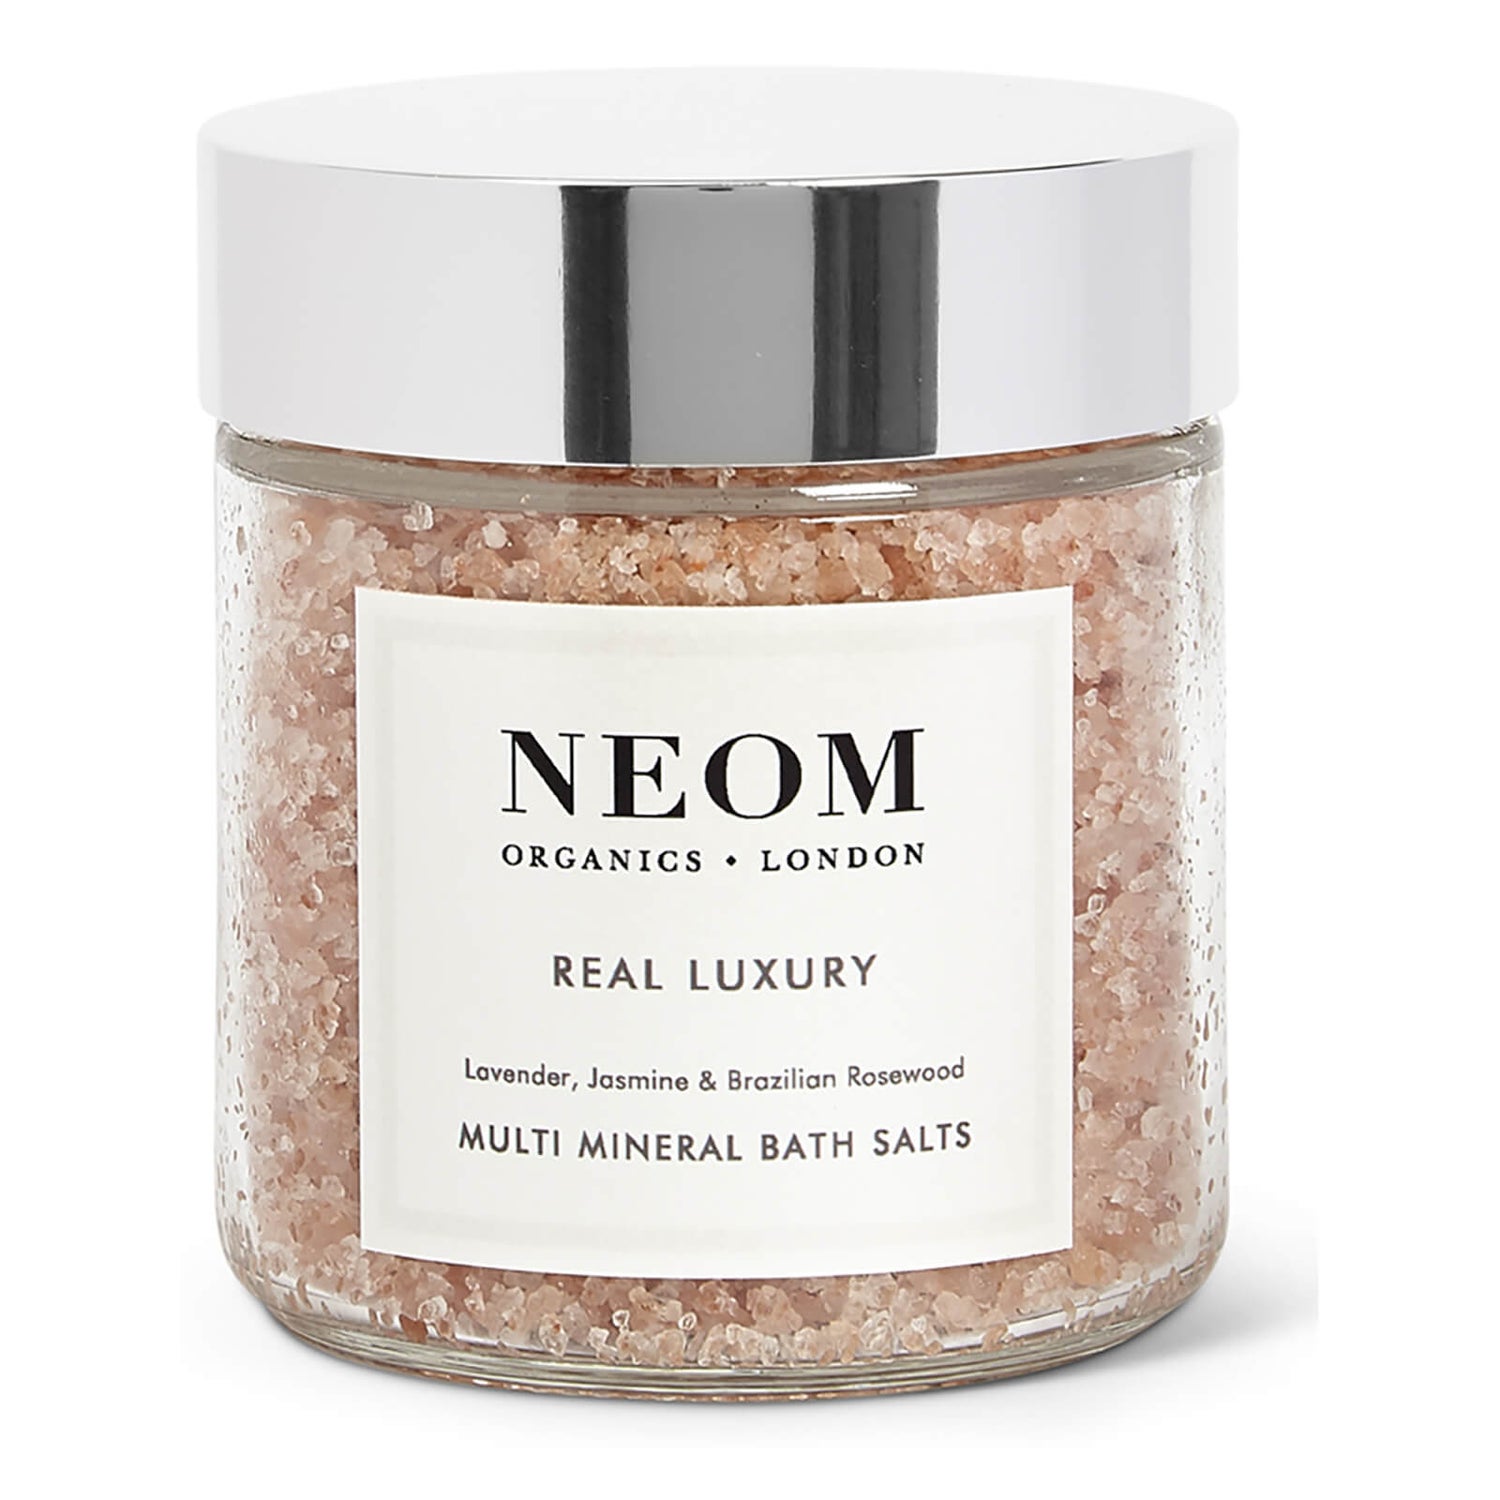 NEOM Real Luxury Natural Multi Mineral Bath Salts